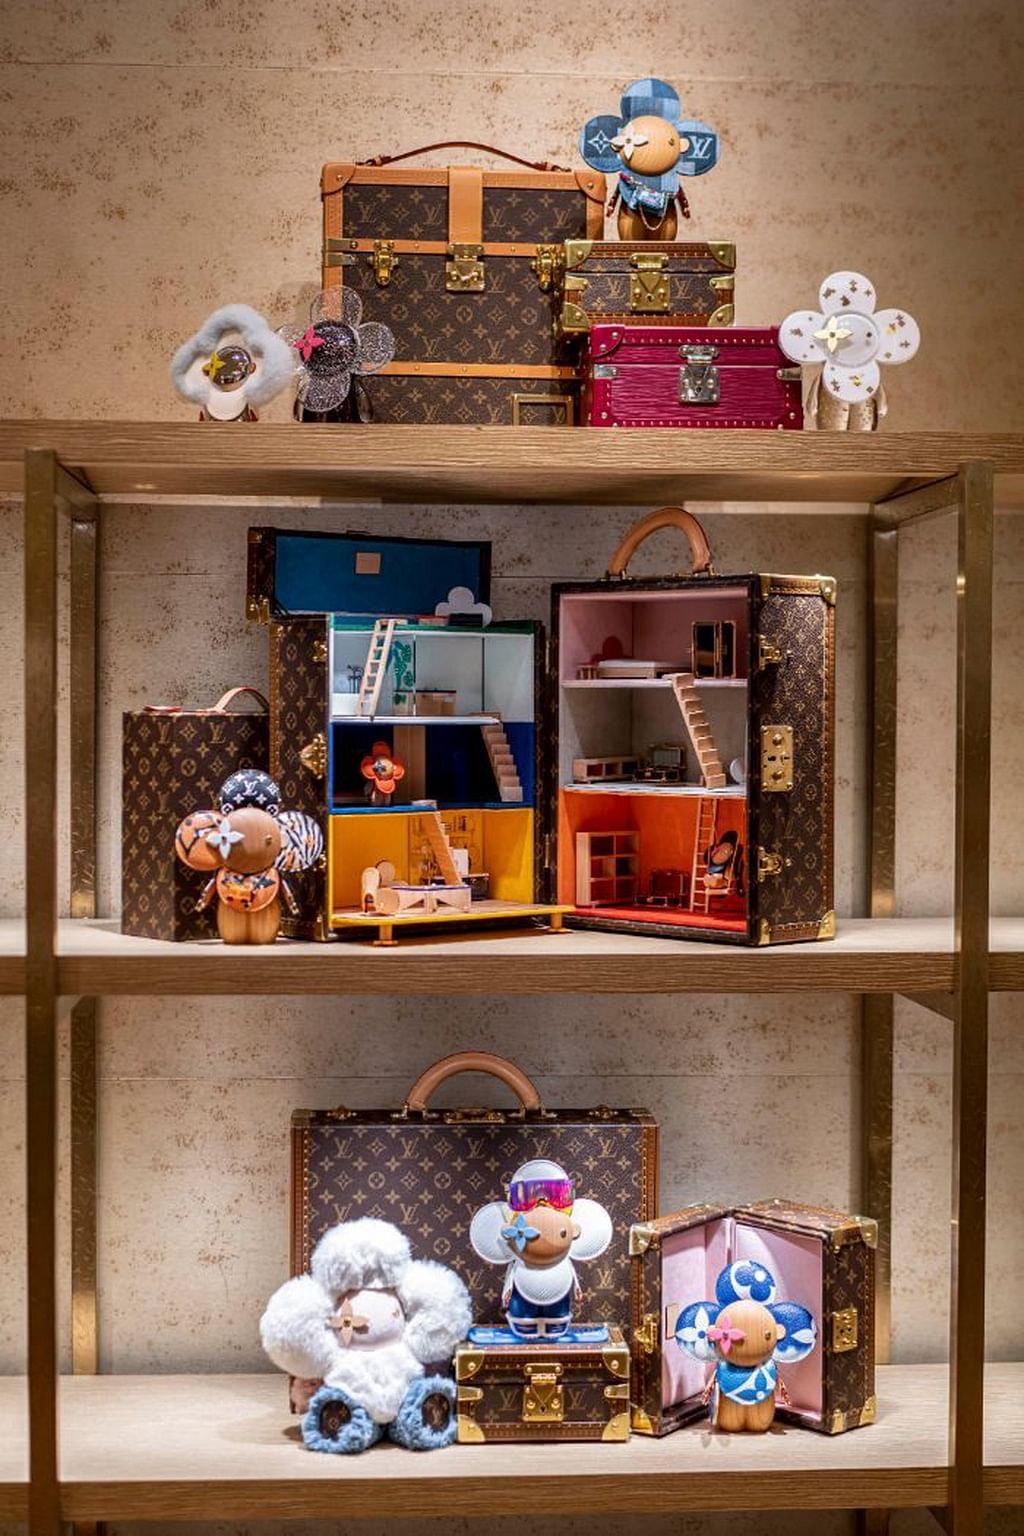 Discover Louis Vuitton's savoire faire in an oasis getaway